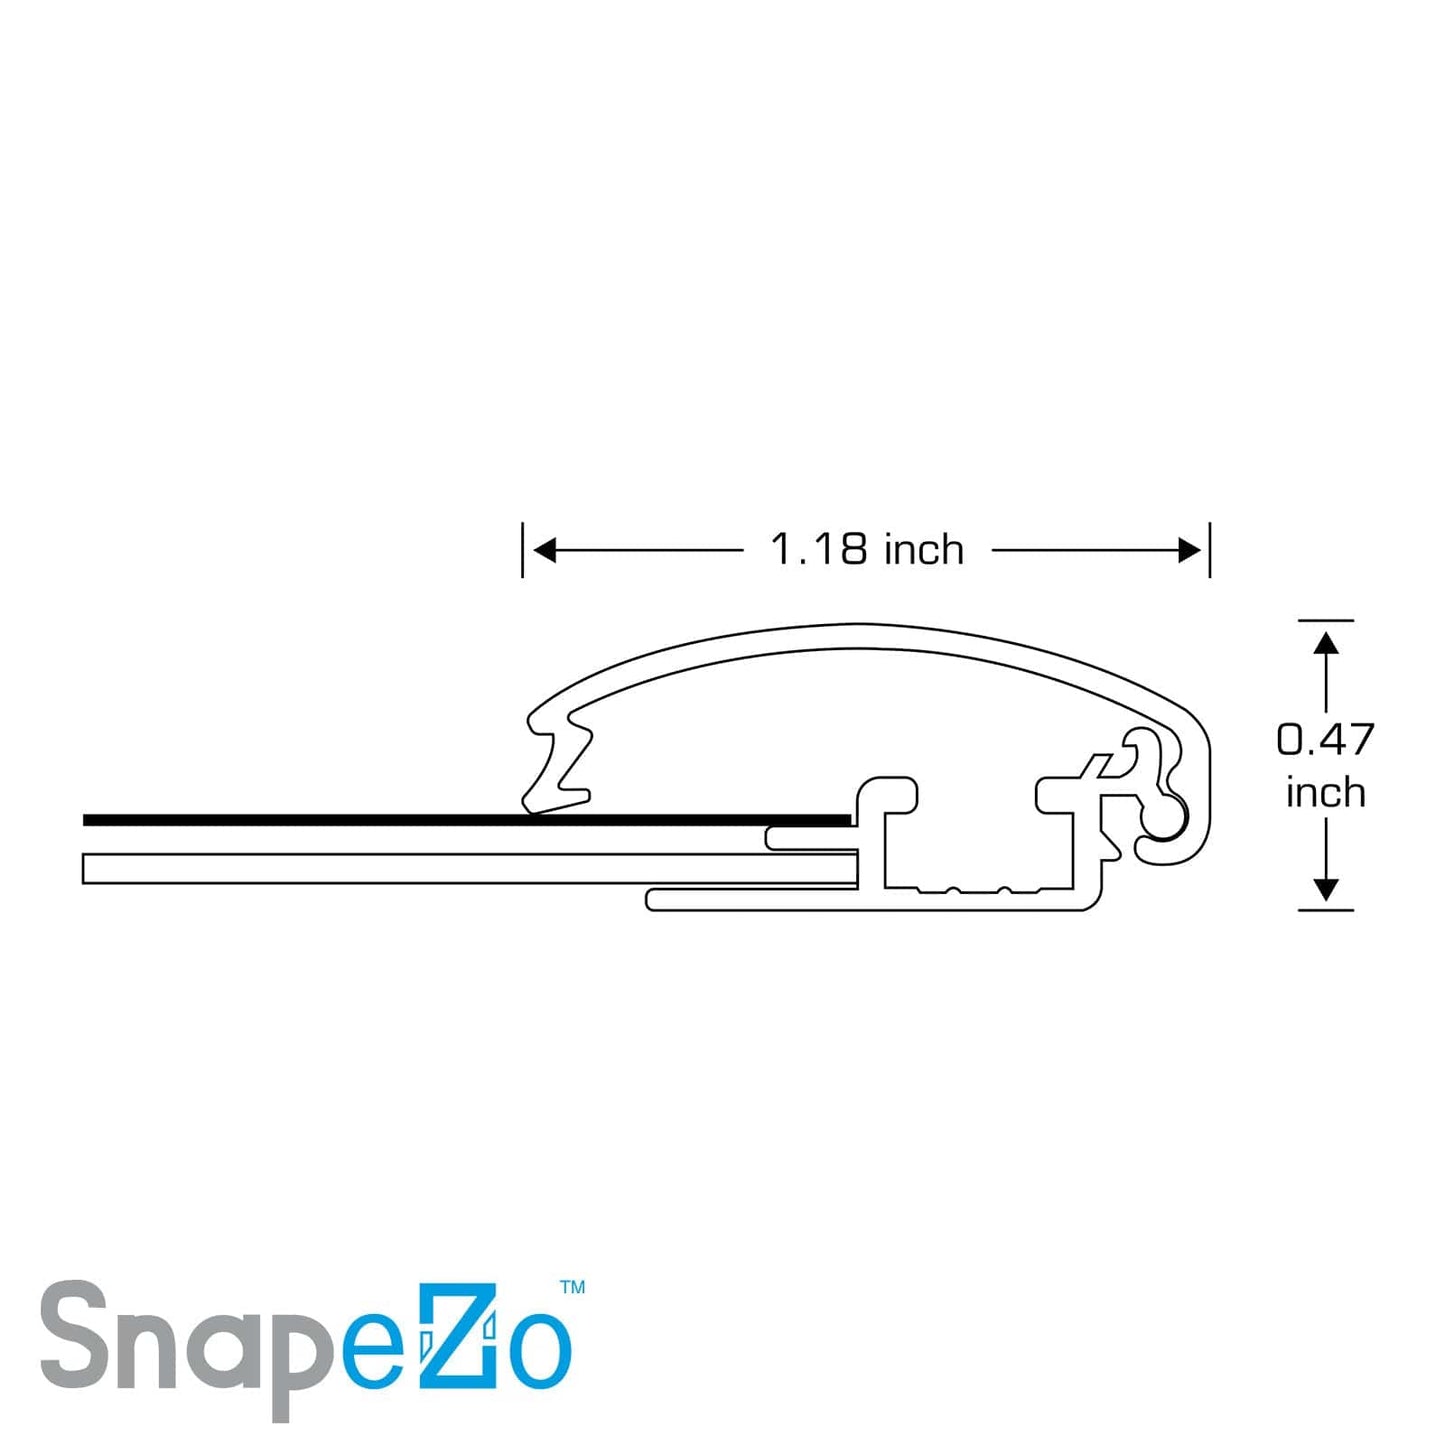 16x22 White SnapeZo® Snap Frame - 1.2" Profile - Snap Frames Direct